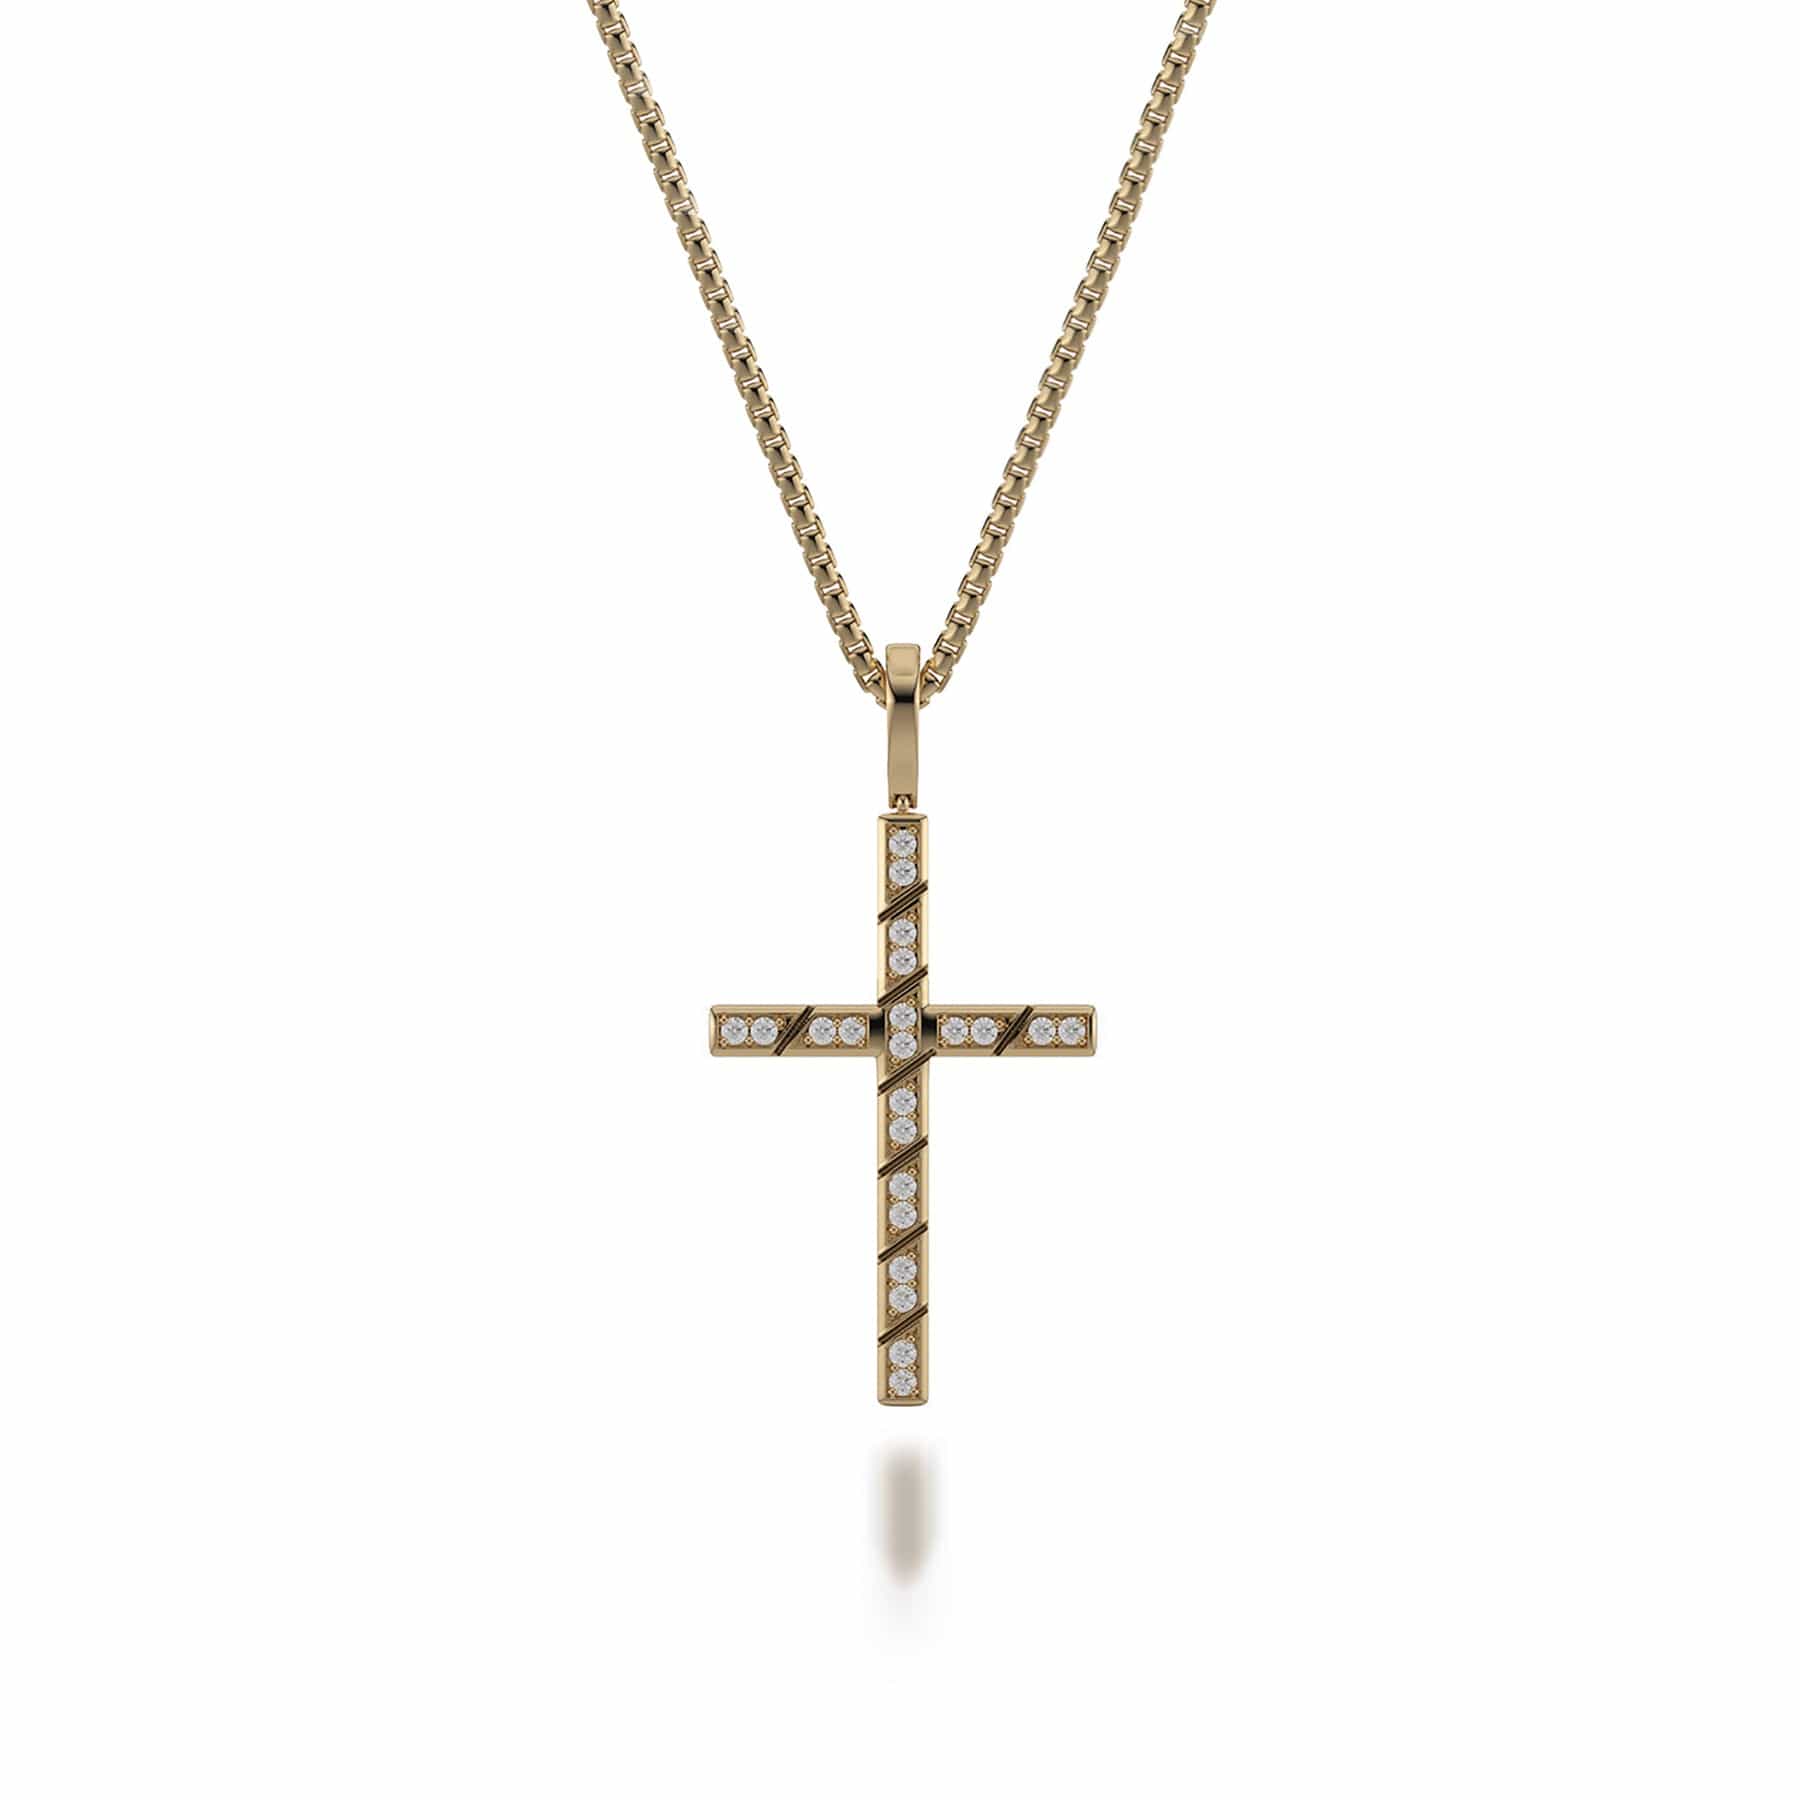 Stunning Diamond Cross Pendant and Chain